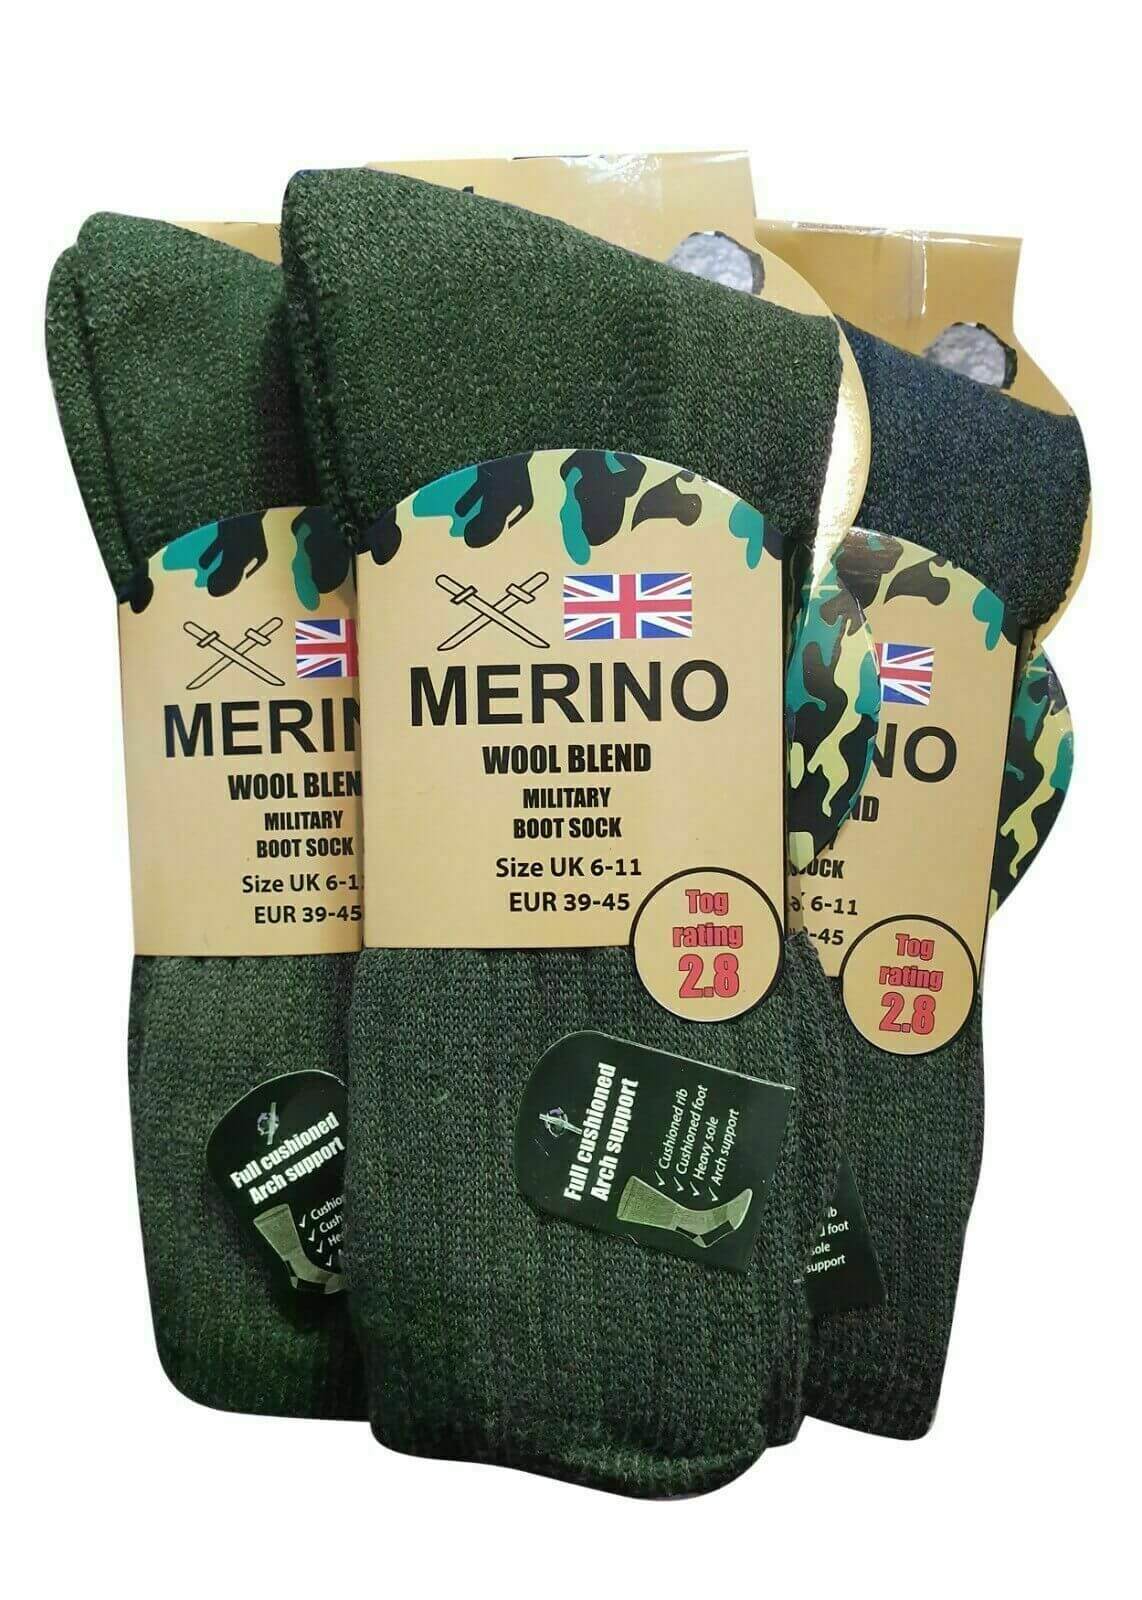 Men's Merino Wool Blend Military Work Boot thermal Winter Socks 2.8 Tog Socks 6P